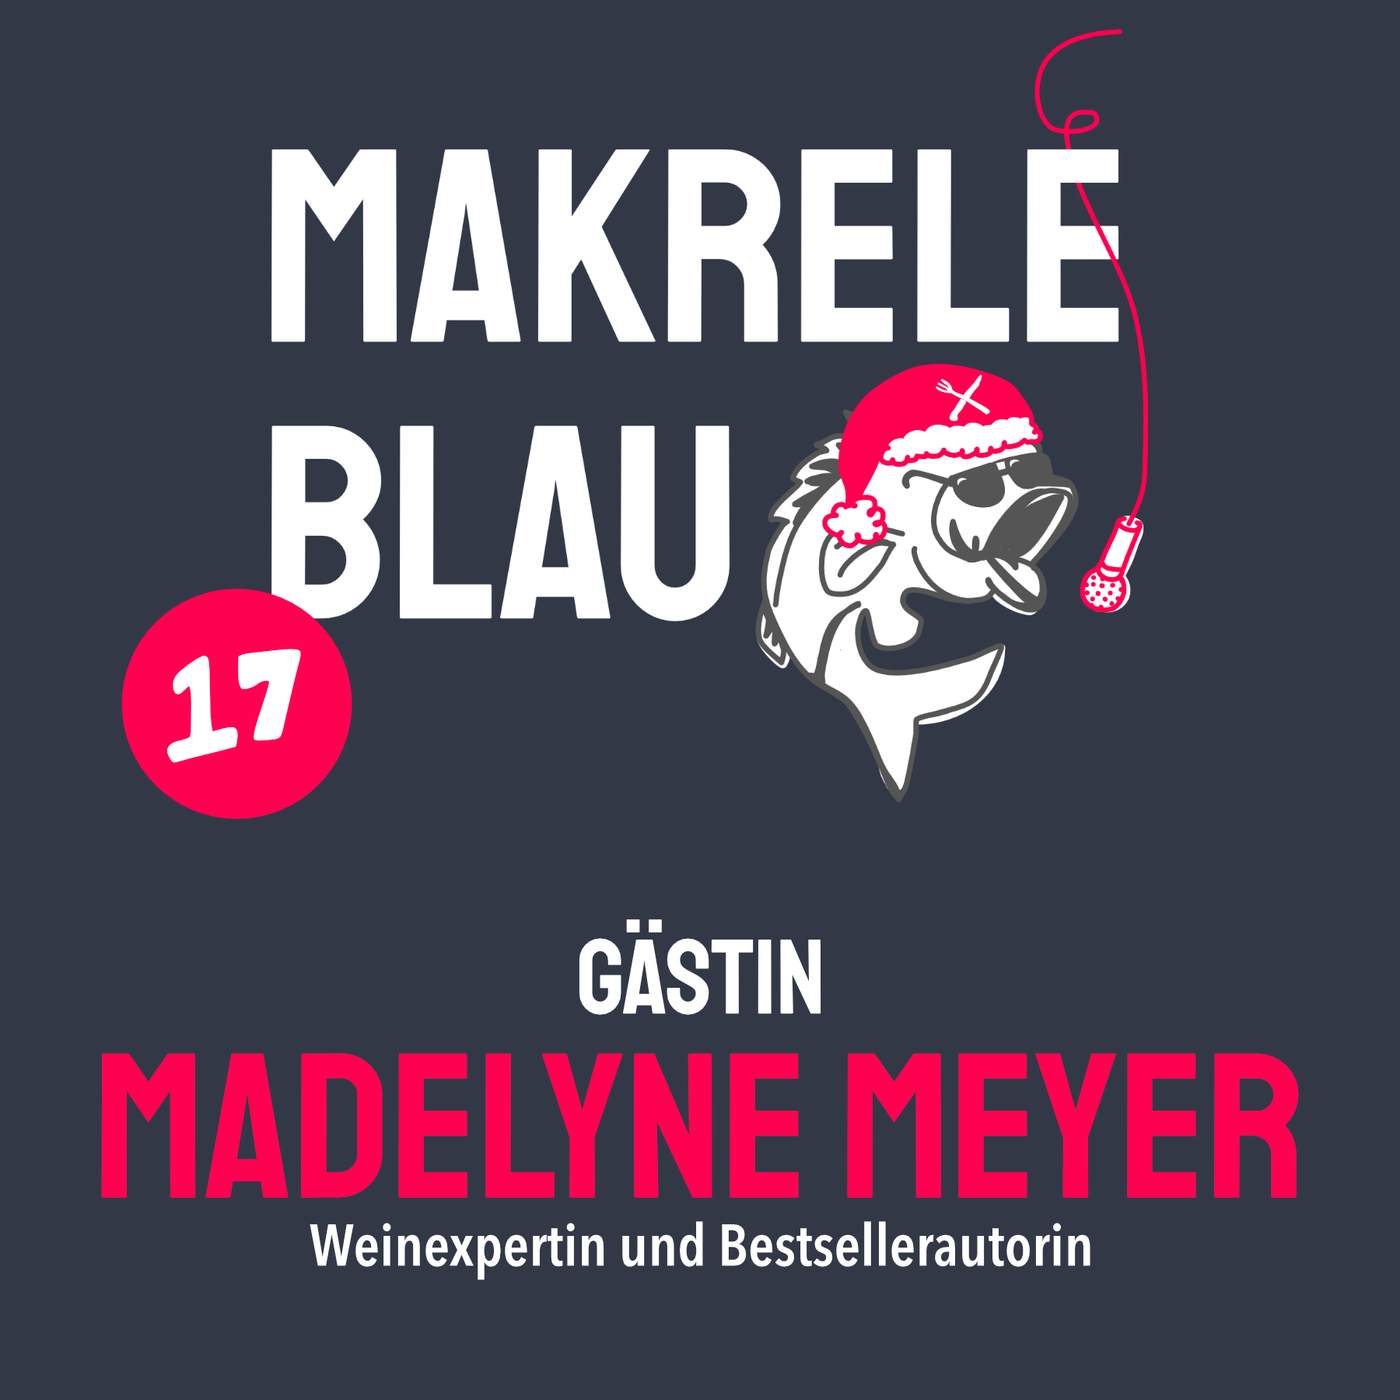 Makrele Blau #17 – z viel uf äm Teller, mit dä Madelyne Meyer alias Edvin